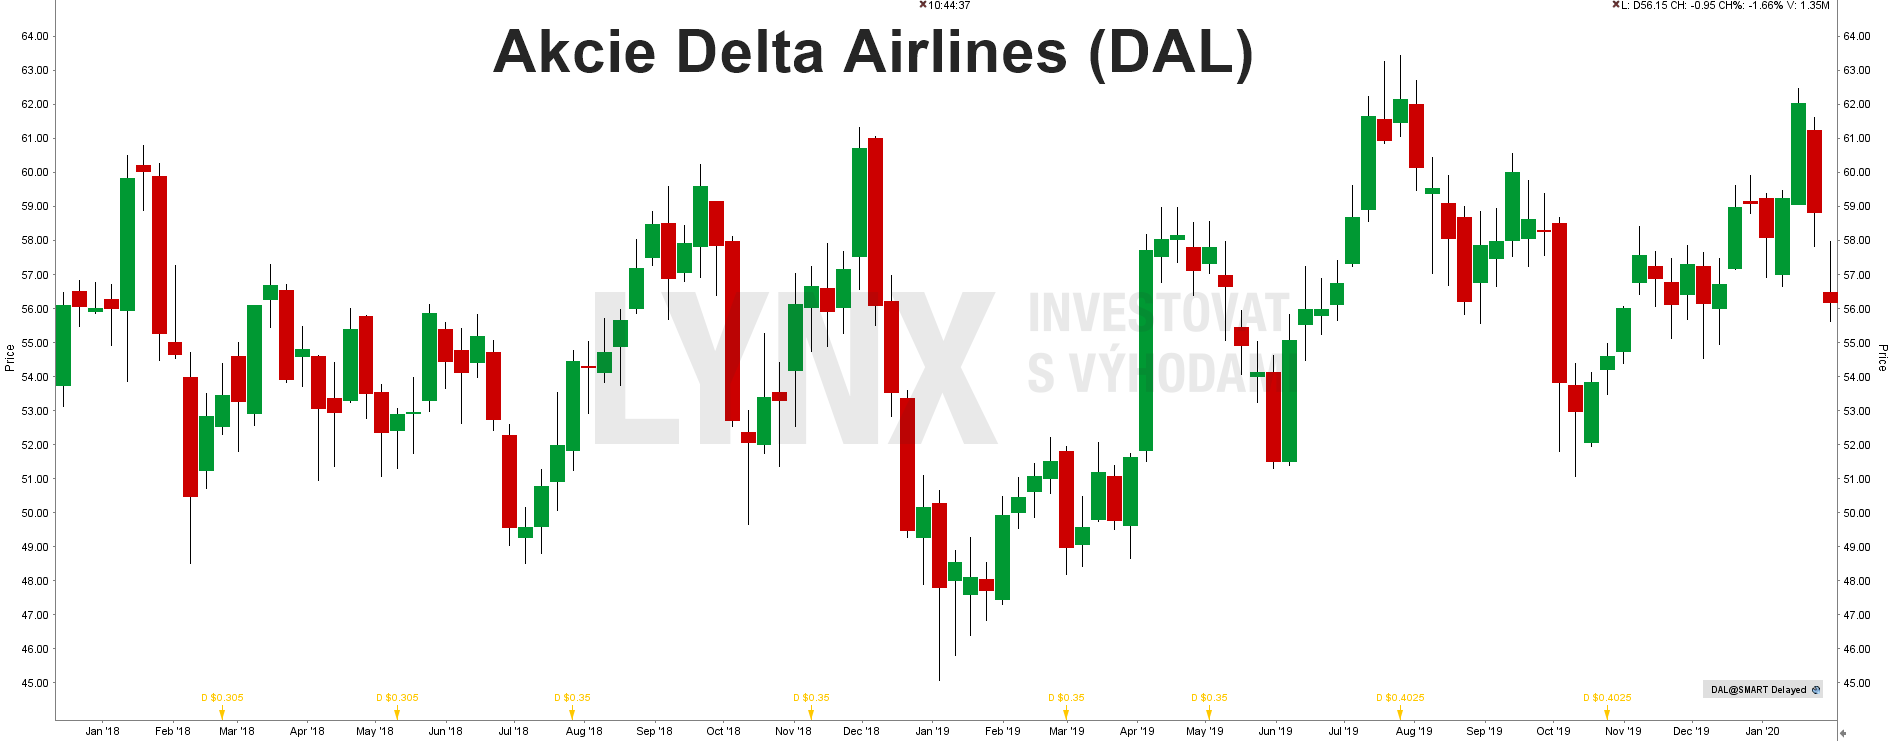 Akcie Delta Airlines